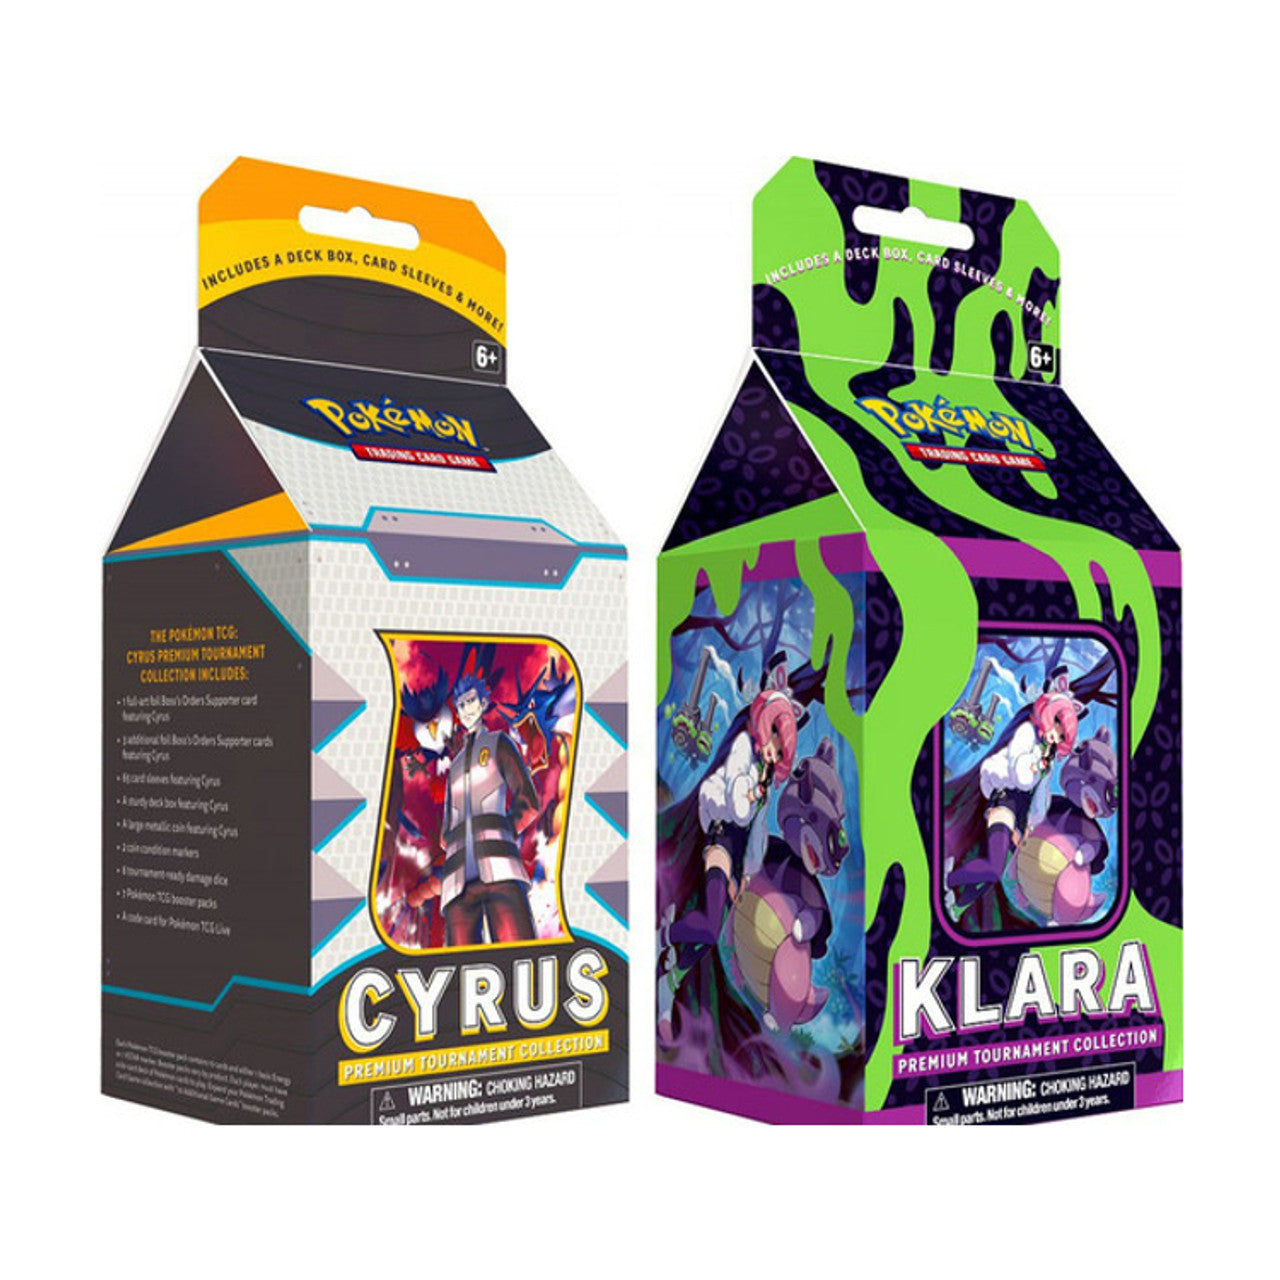 Pokemon Tcg Premium Tournament Collection Cyrus/Klara | Devastation Store